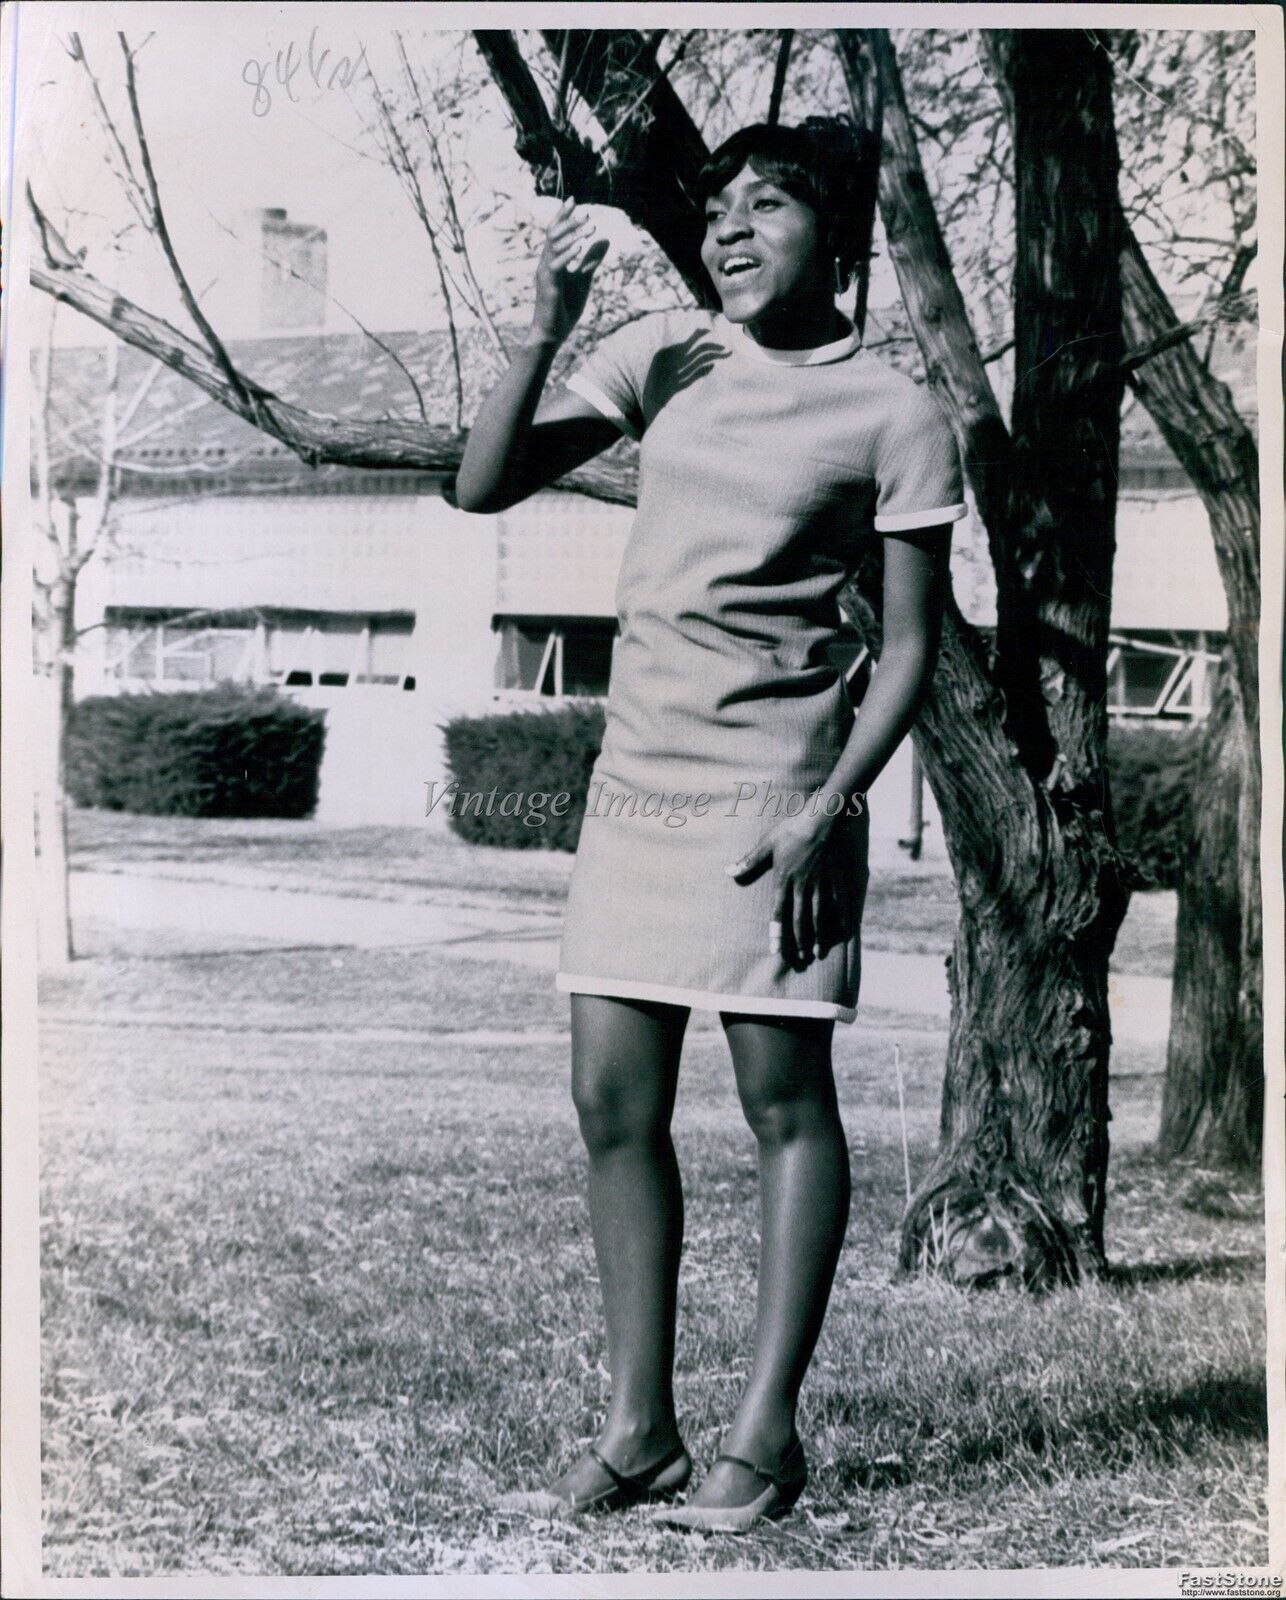 1968 Sarah Washington Black Student Poses Outside Classroom Education Photo 8X10